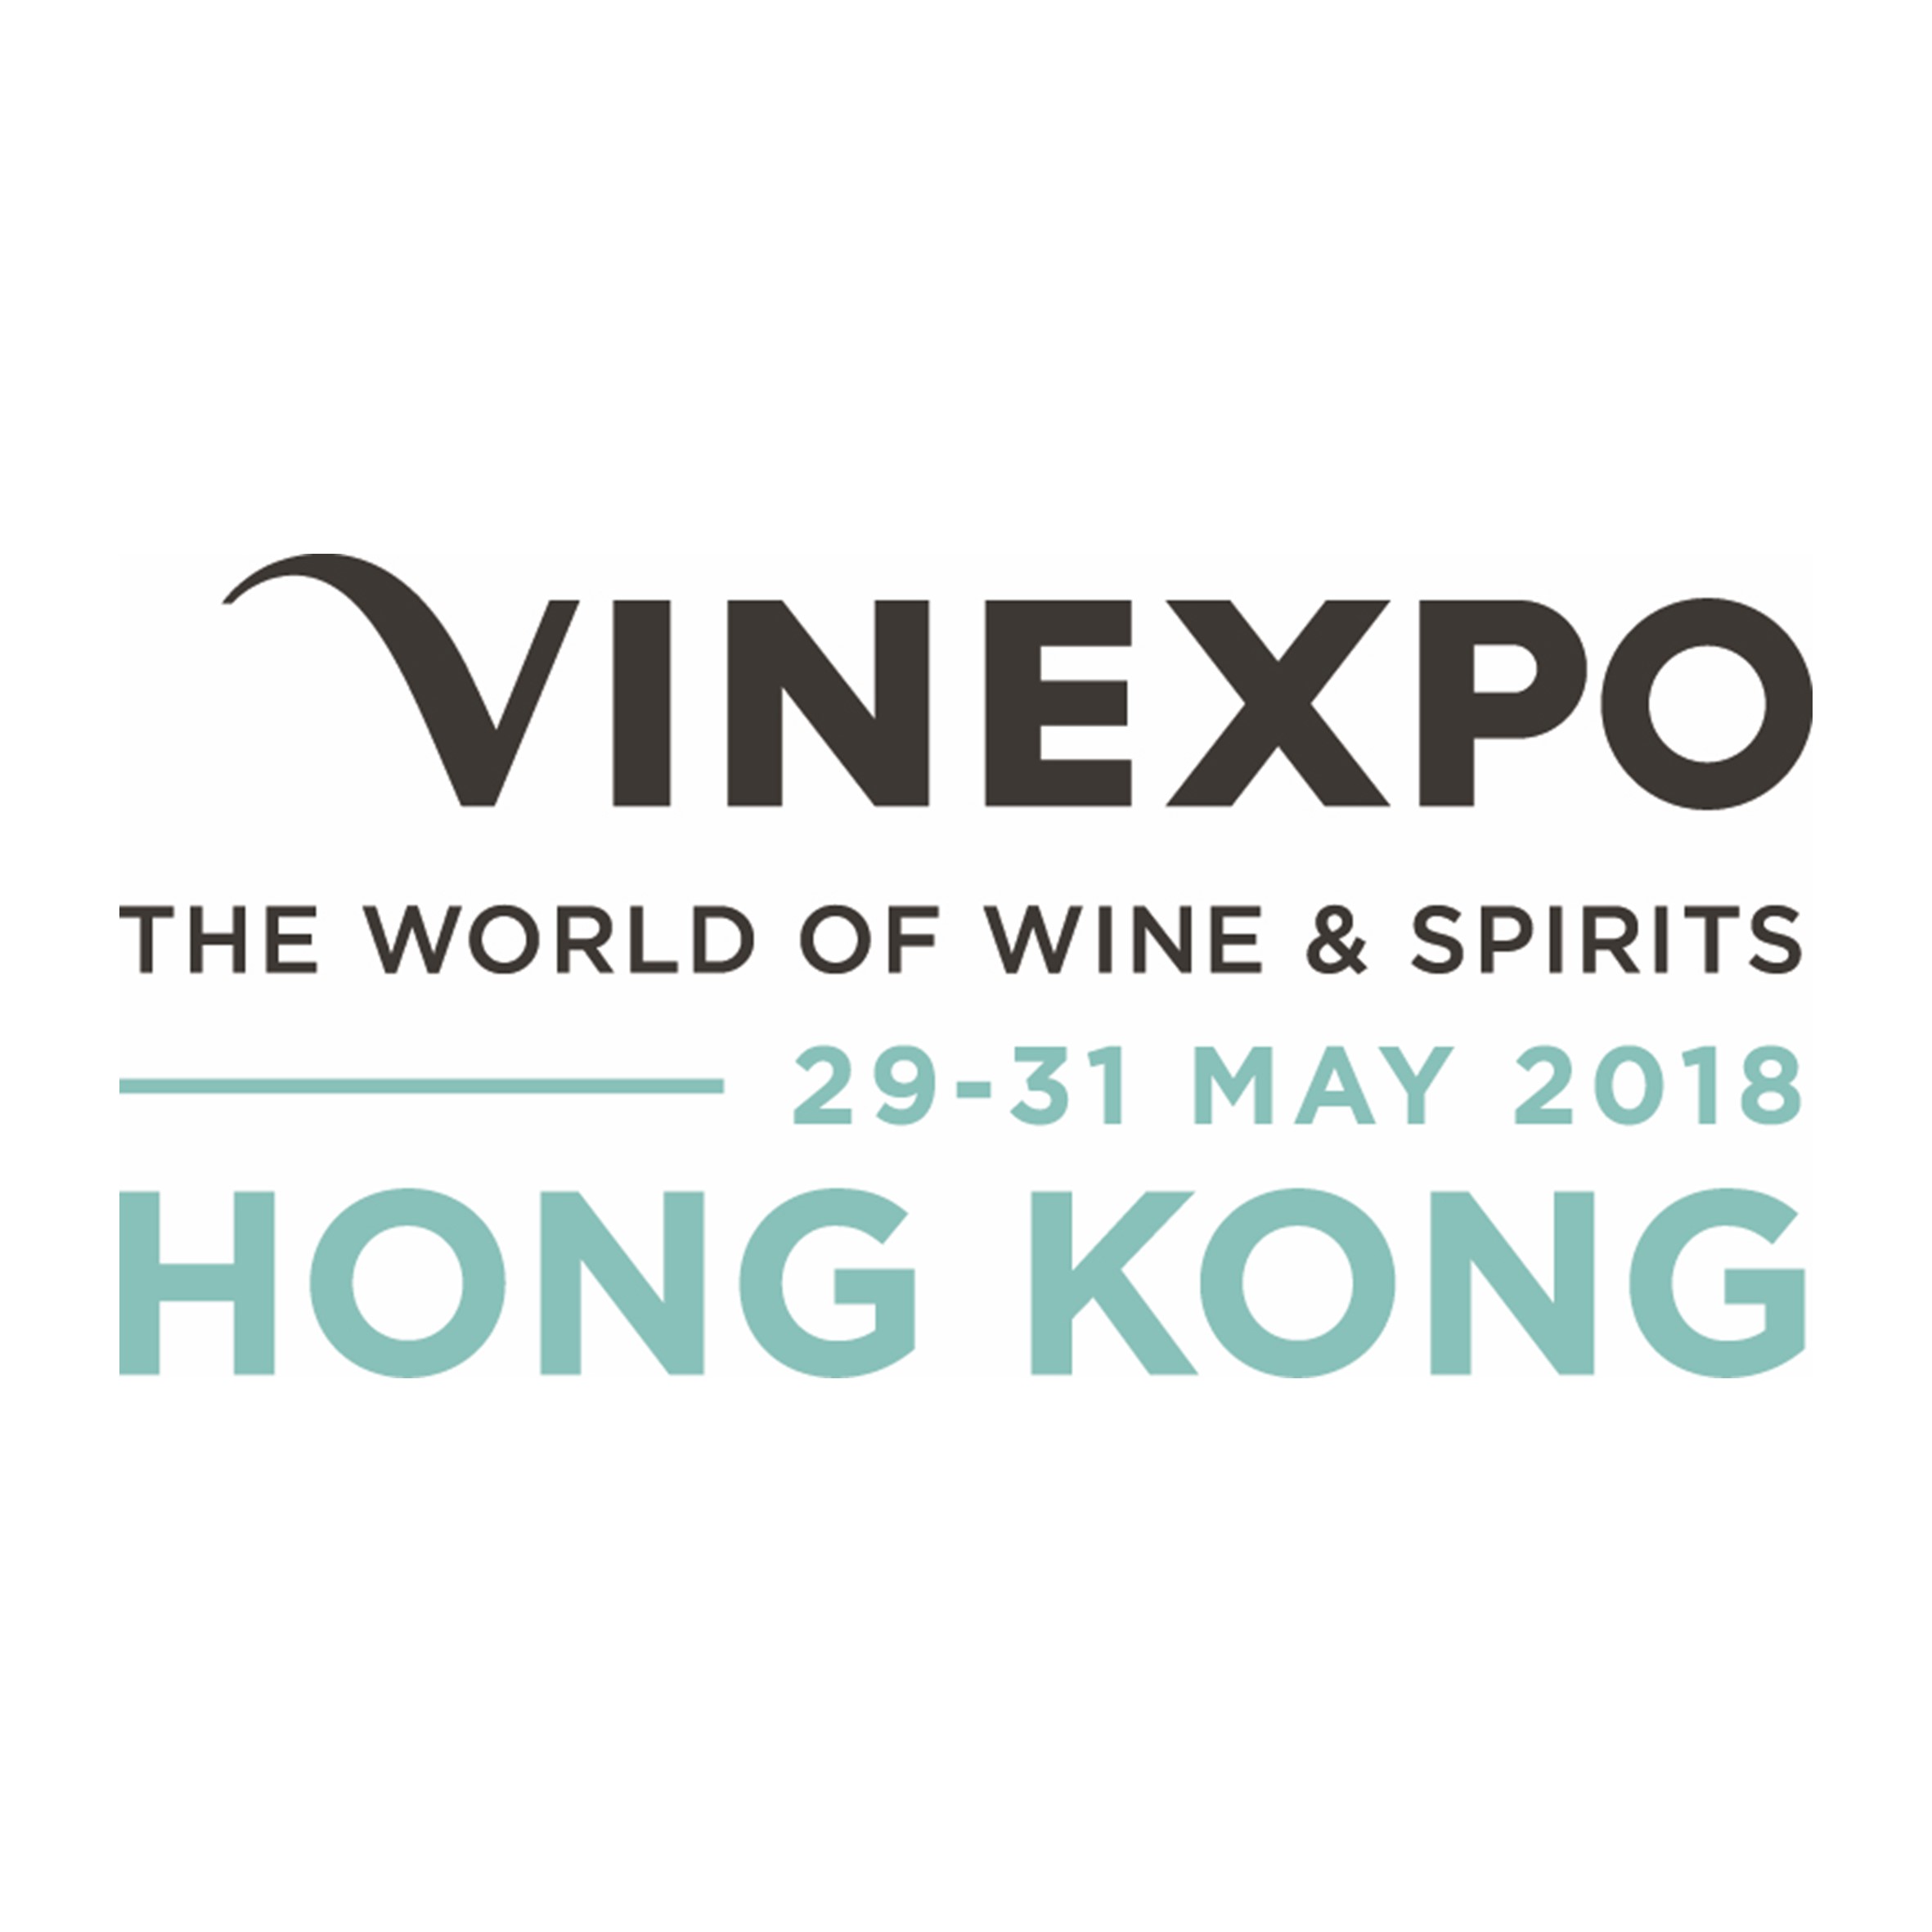 Vinexpo Hong Kong Logo 2018 - From special forces to Vipassana meditation